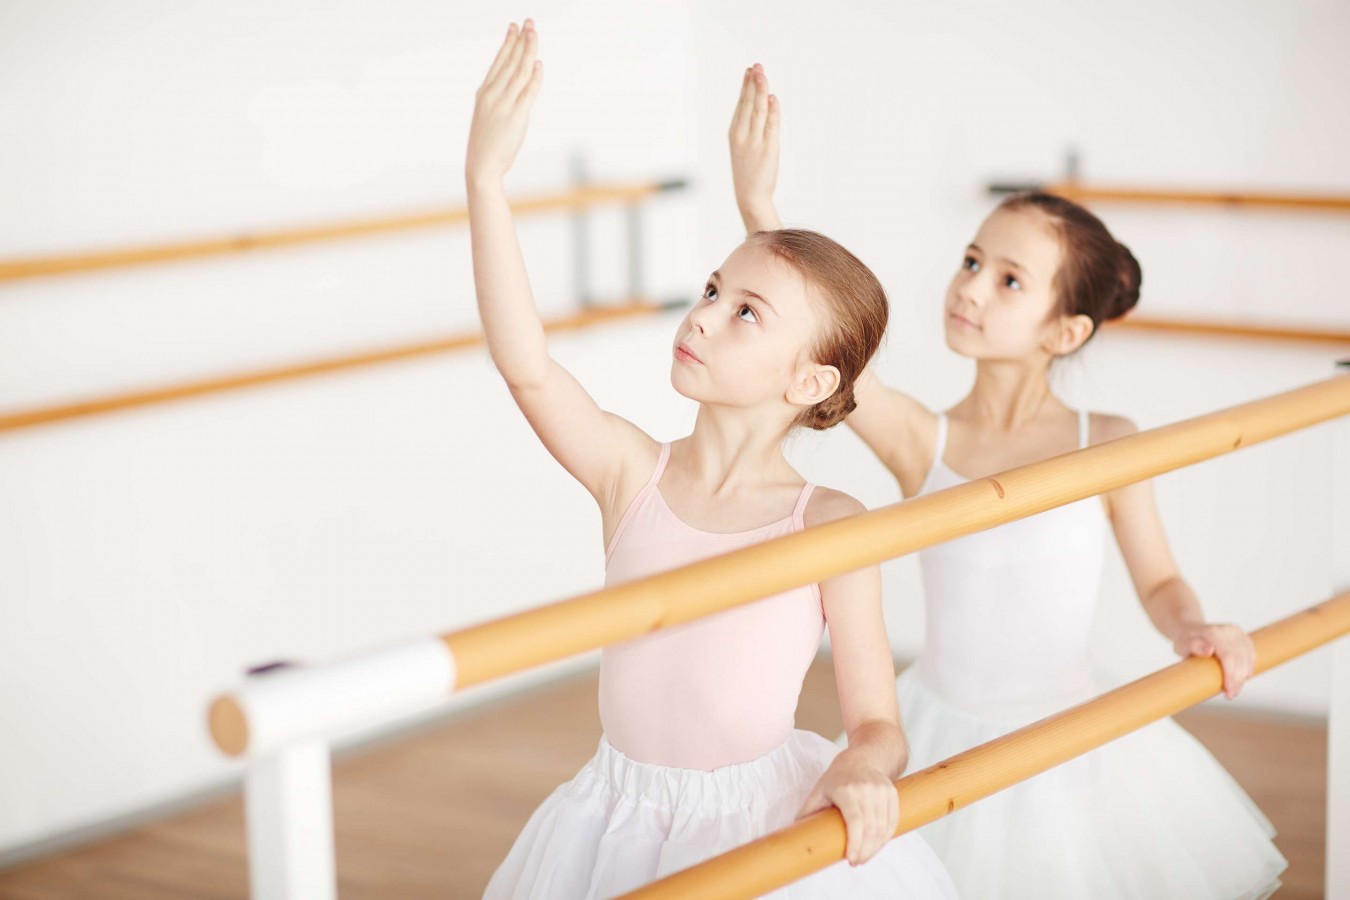 10 Foundational Ballet Moves for Beginners